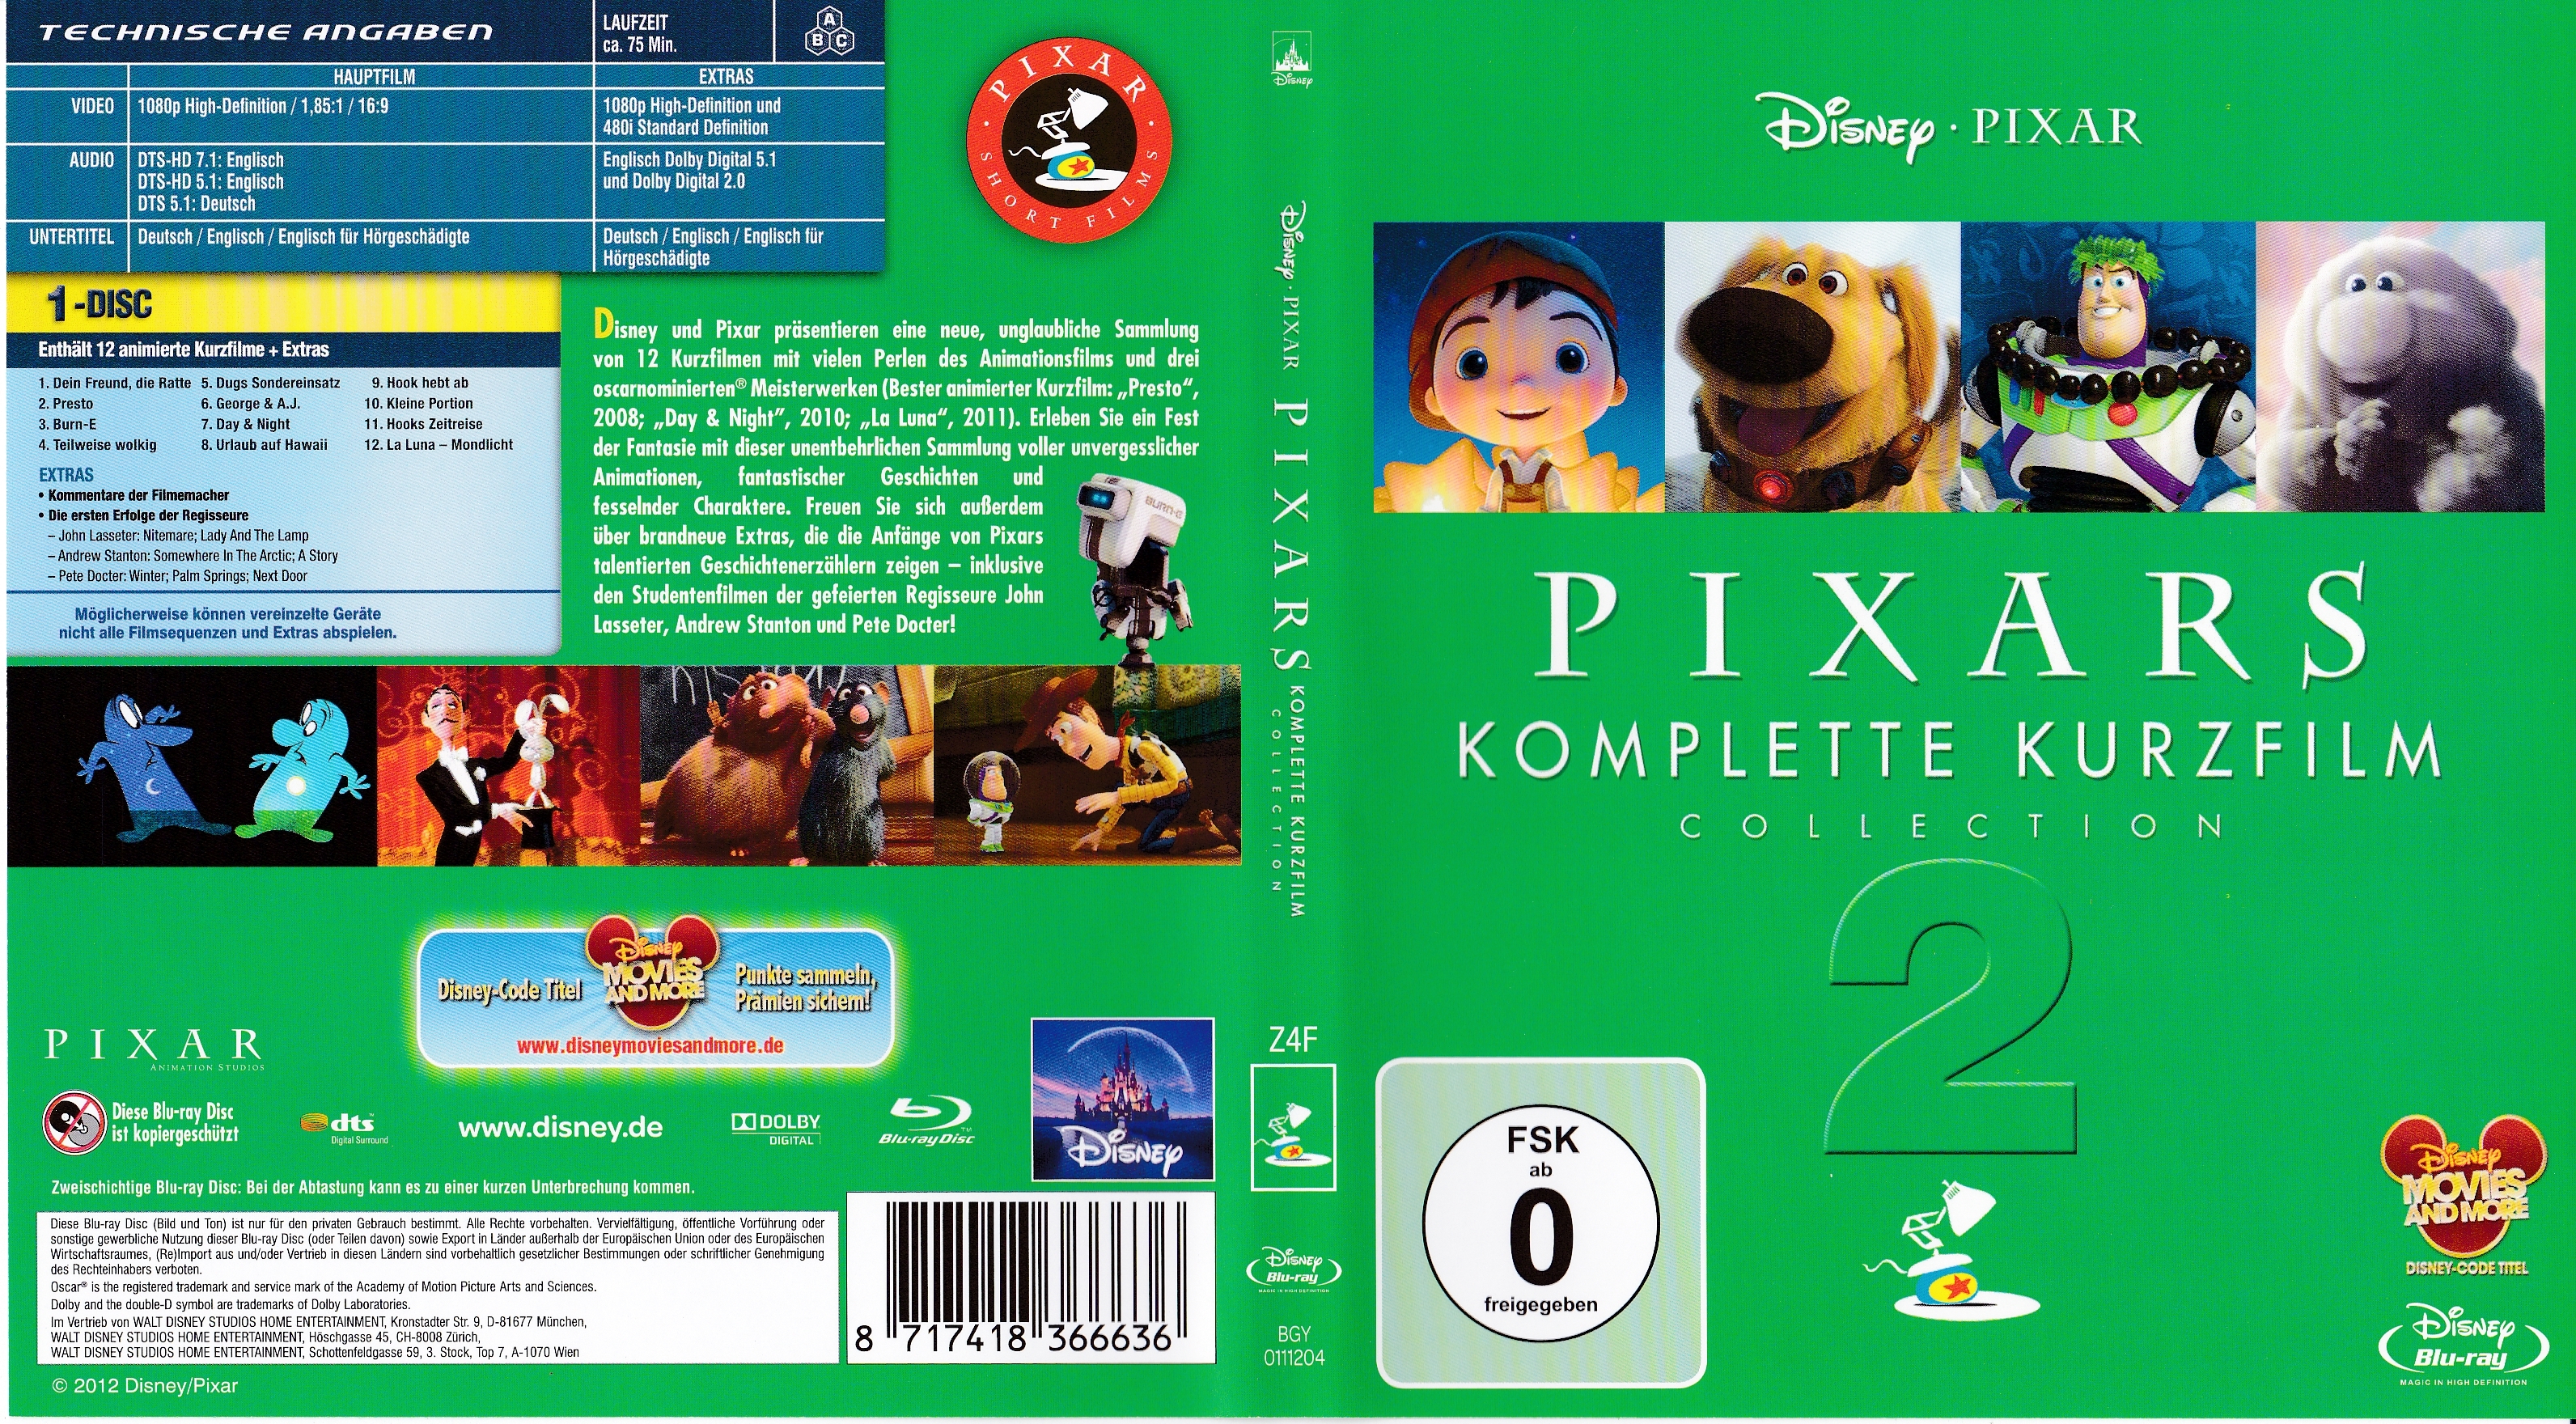 Pixars komplette Kurzfilm Collection - Teil 2